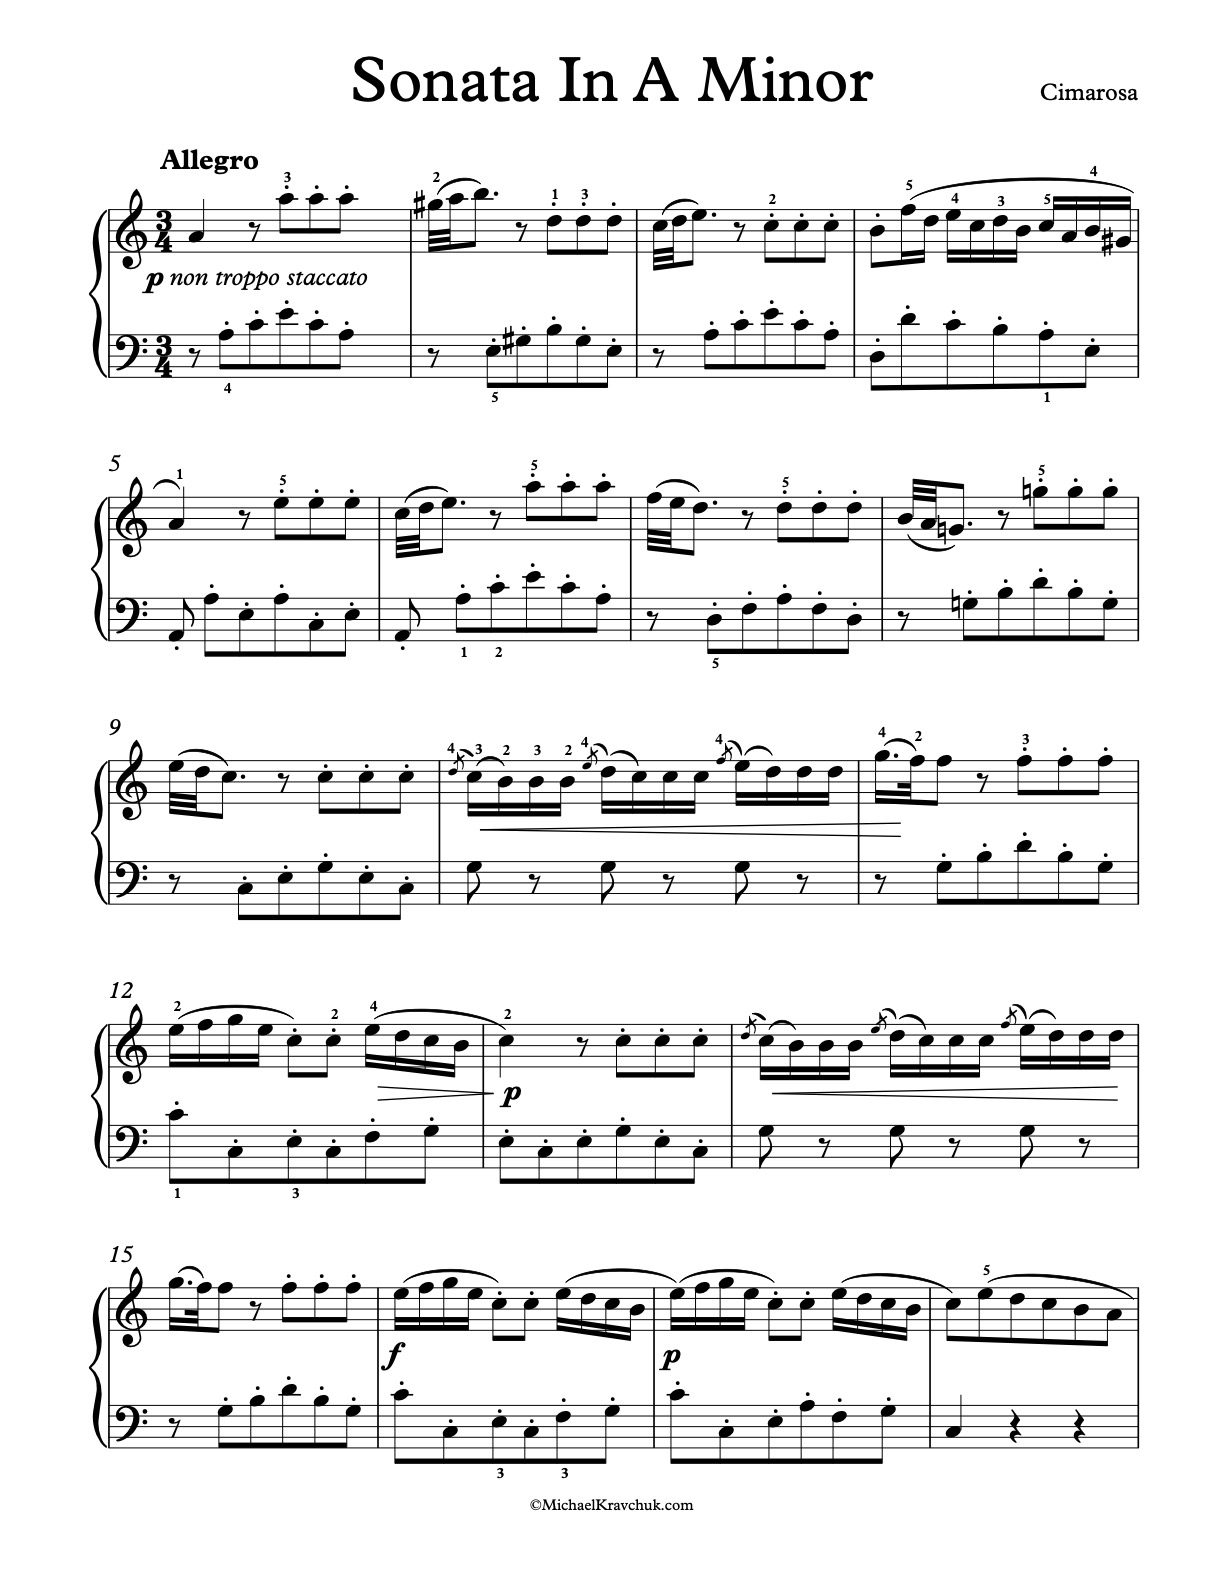 Sonata in A Minor Piano Sheet Music